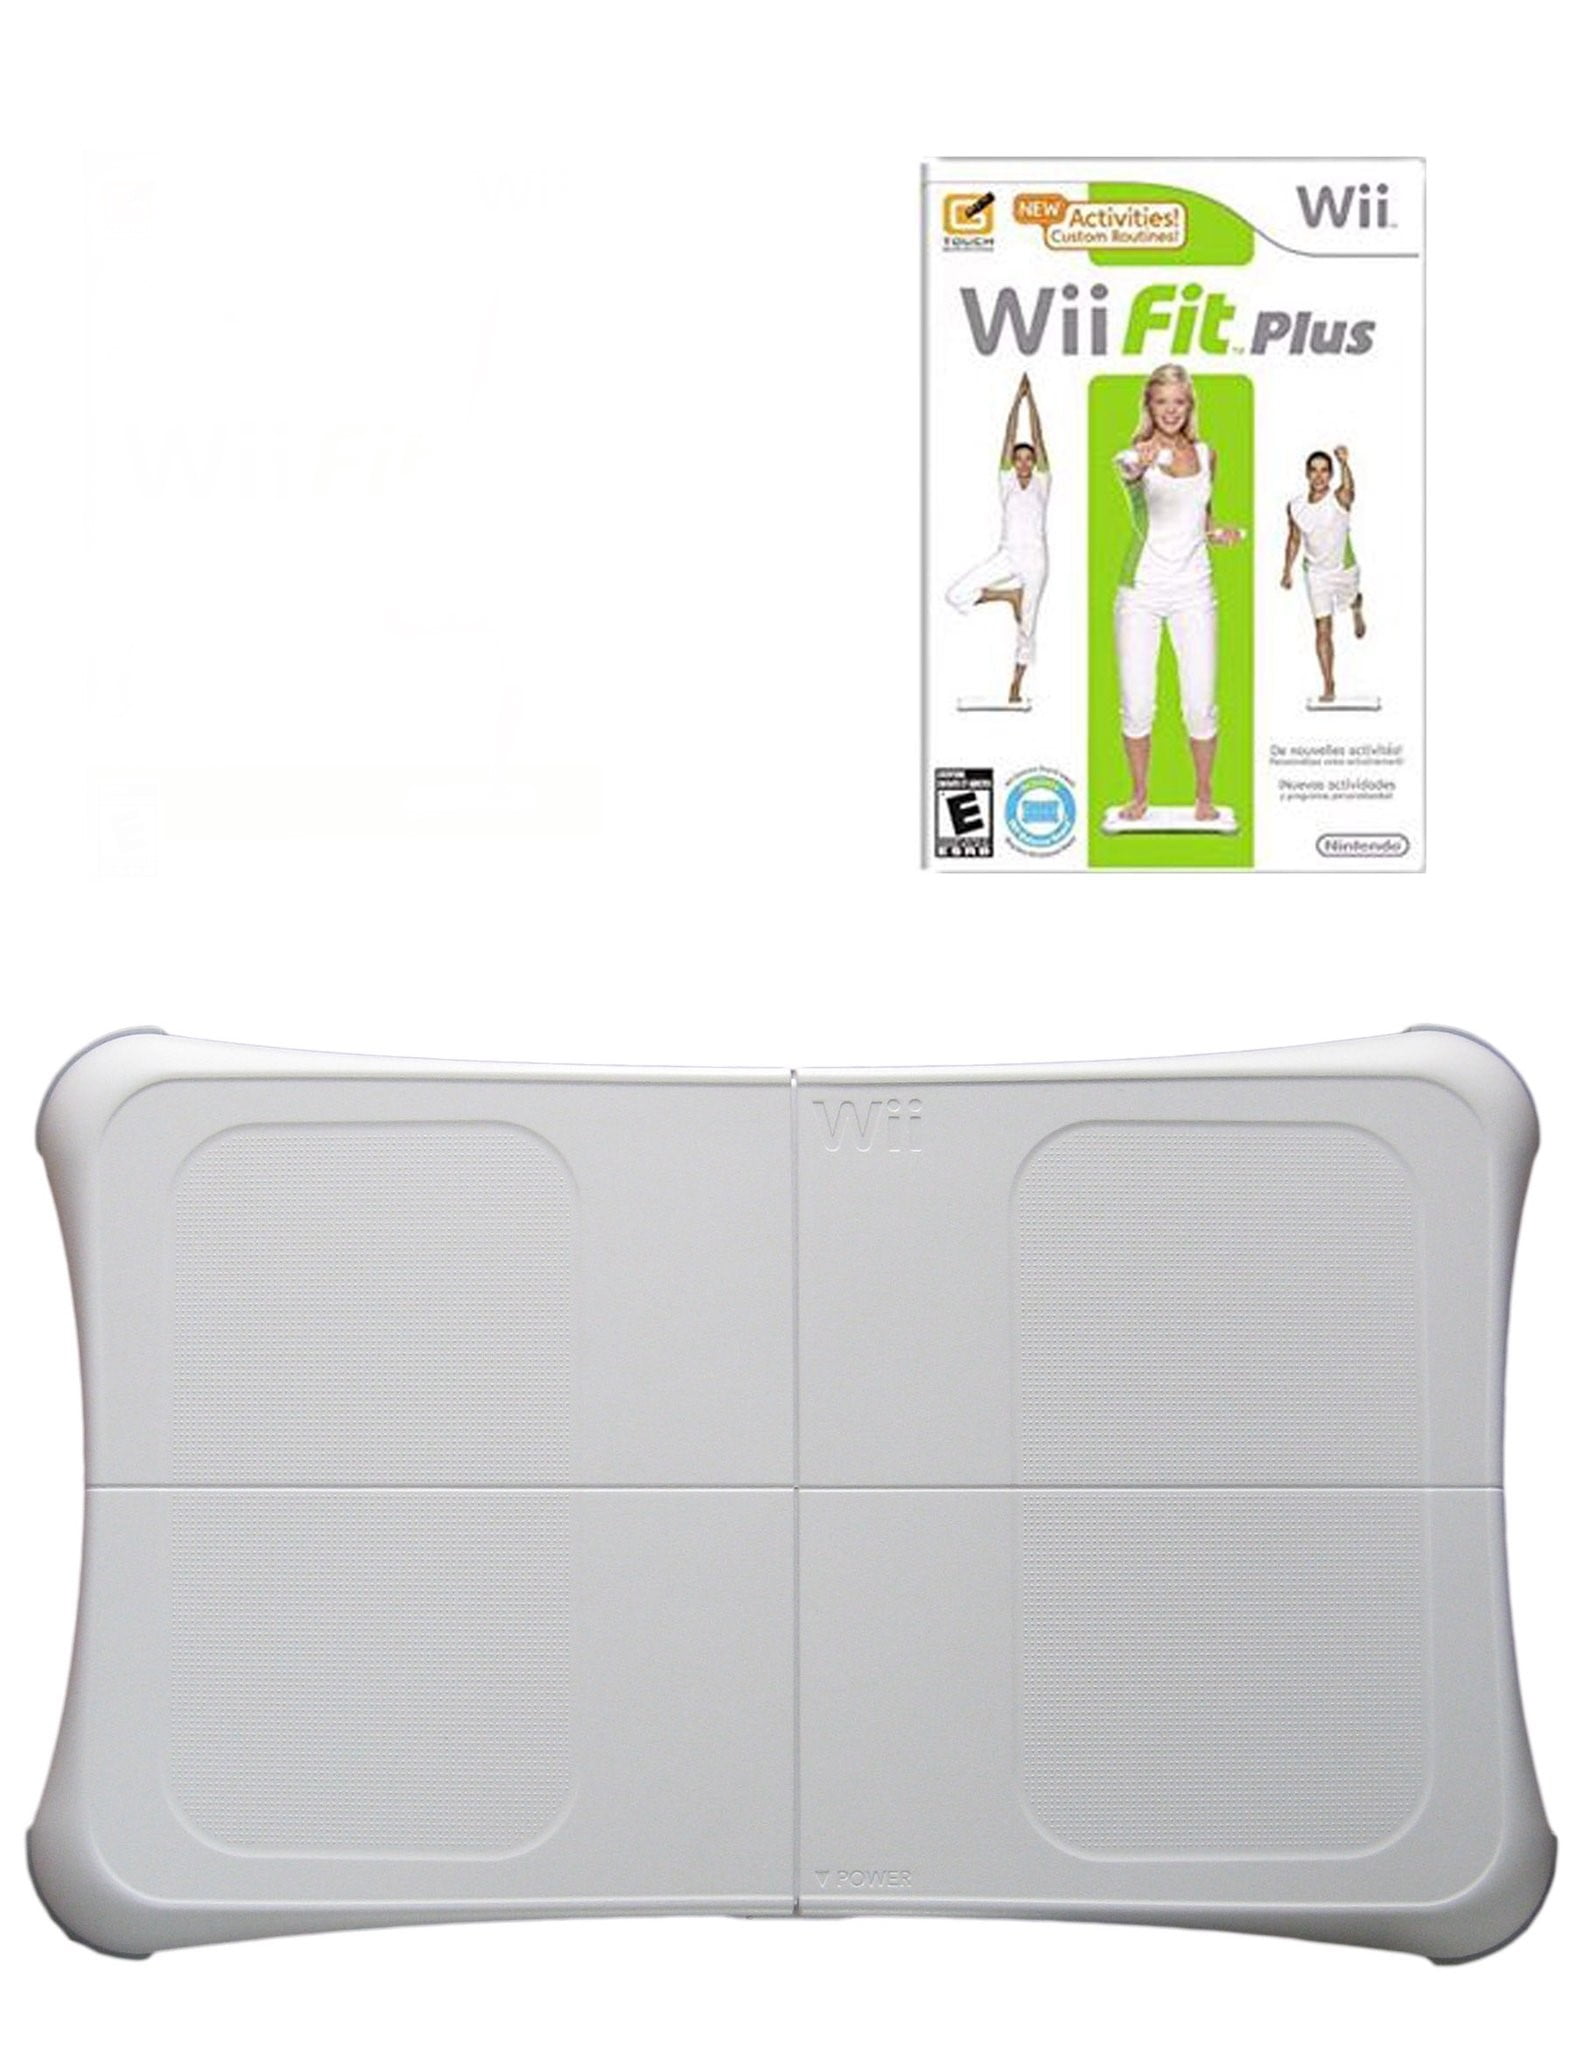 Wii Fit Plus with Balance Board - Refurbished - Walmart.com